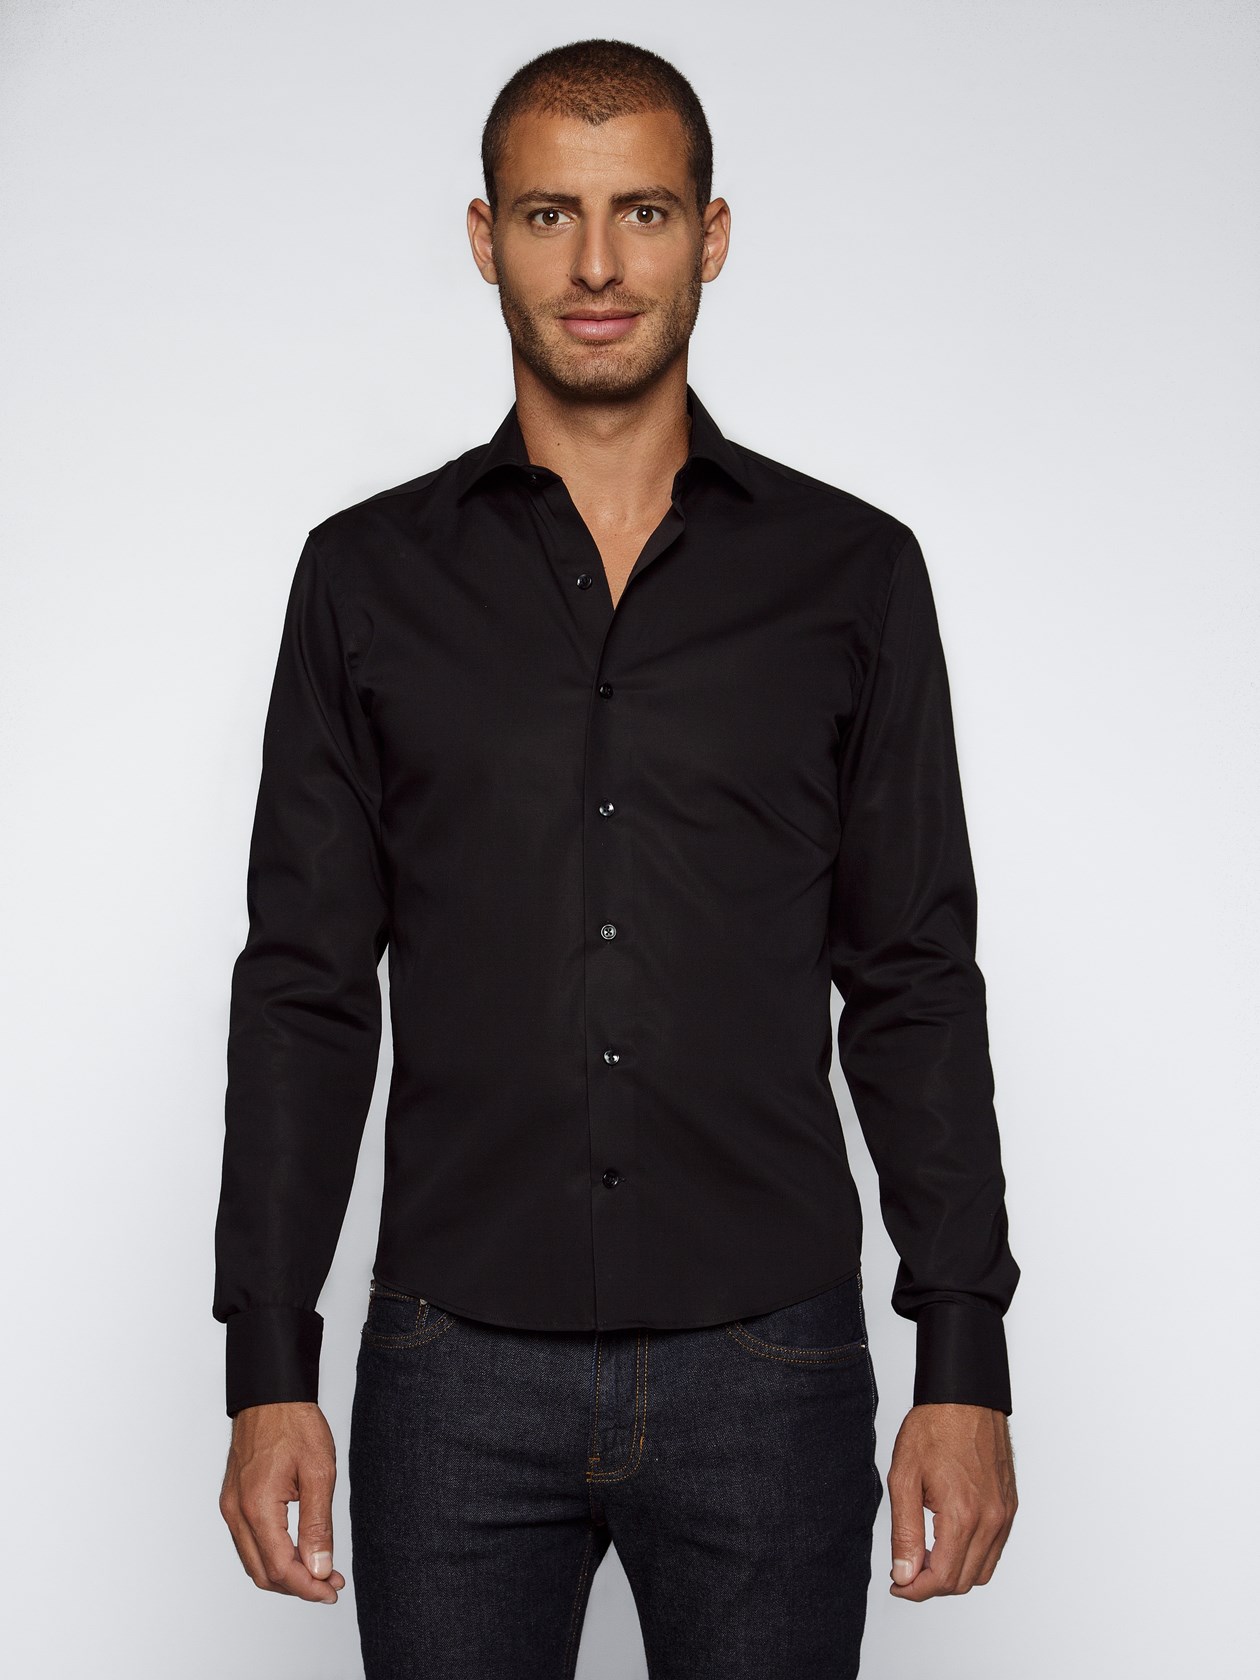 Pima Cotton - Black, Plain Weave Shirt